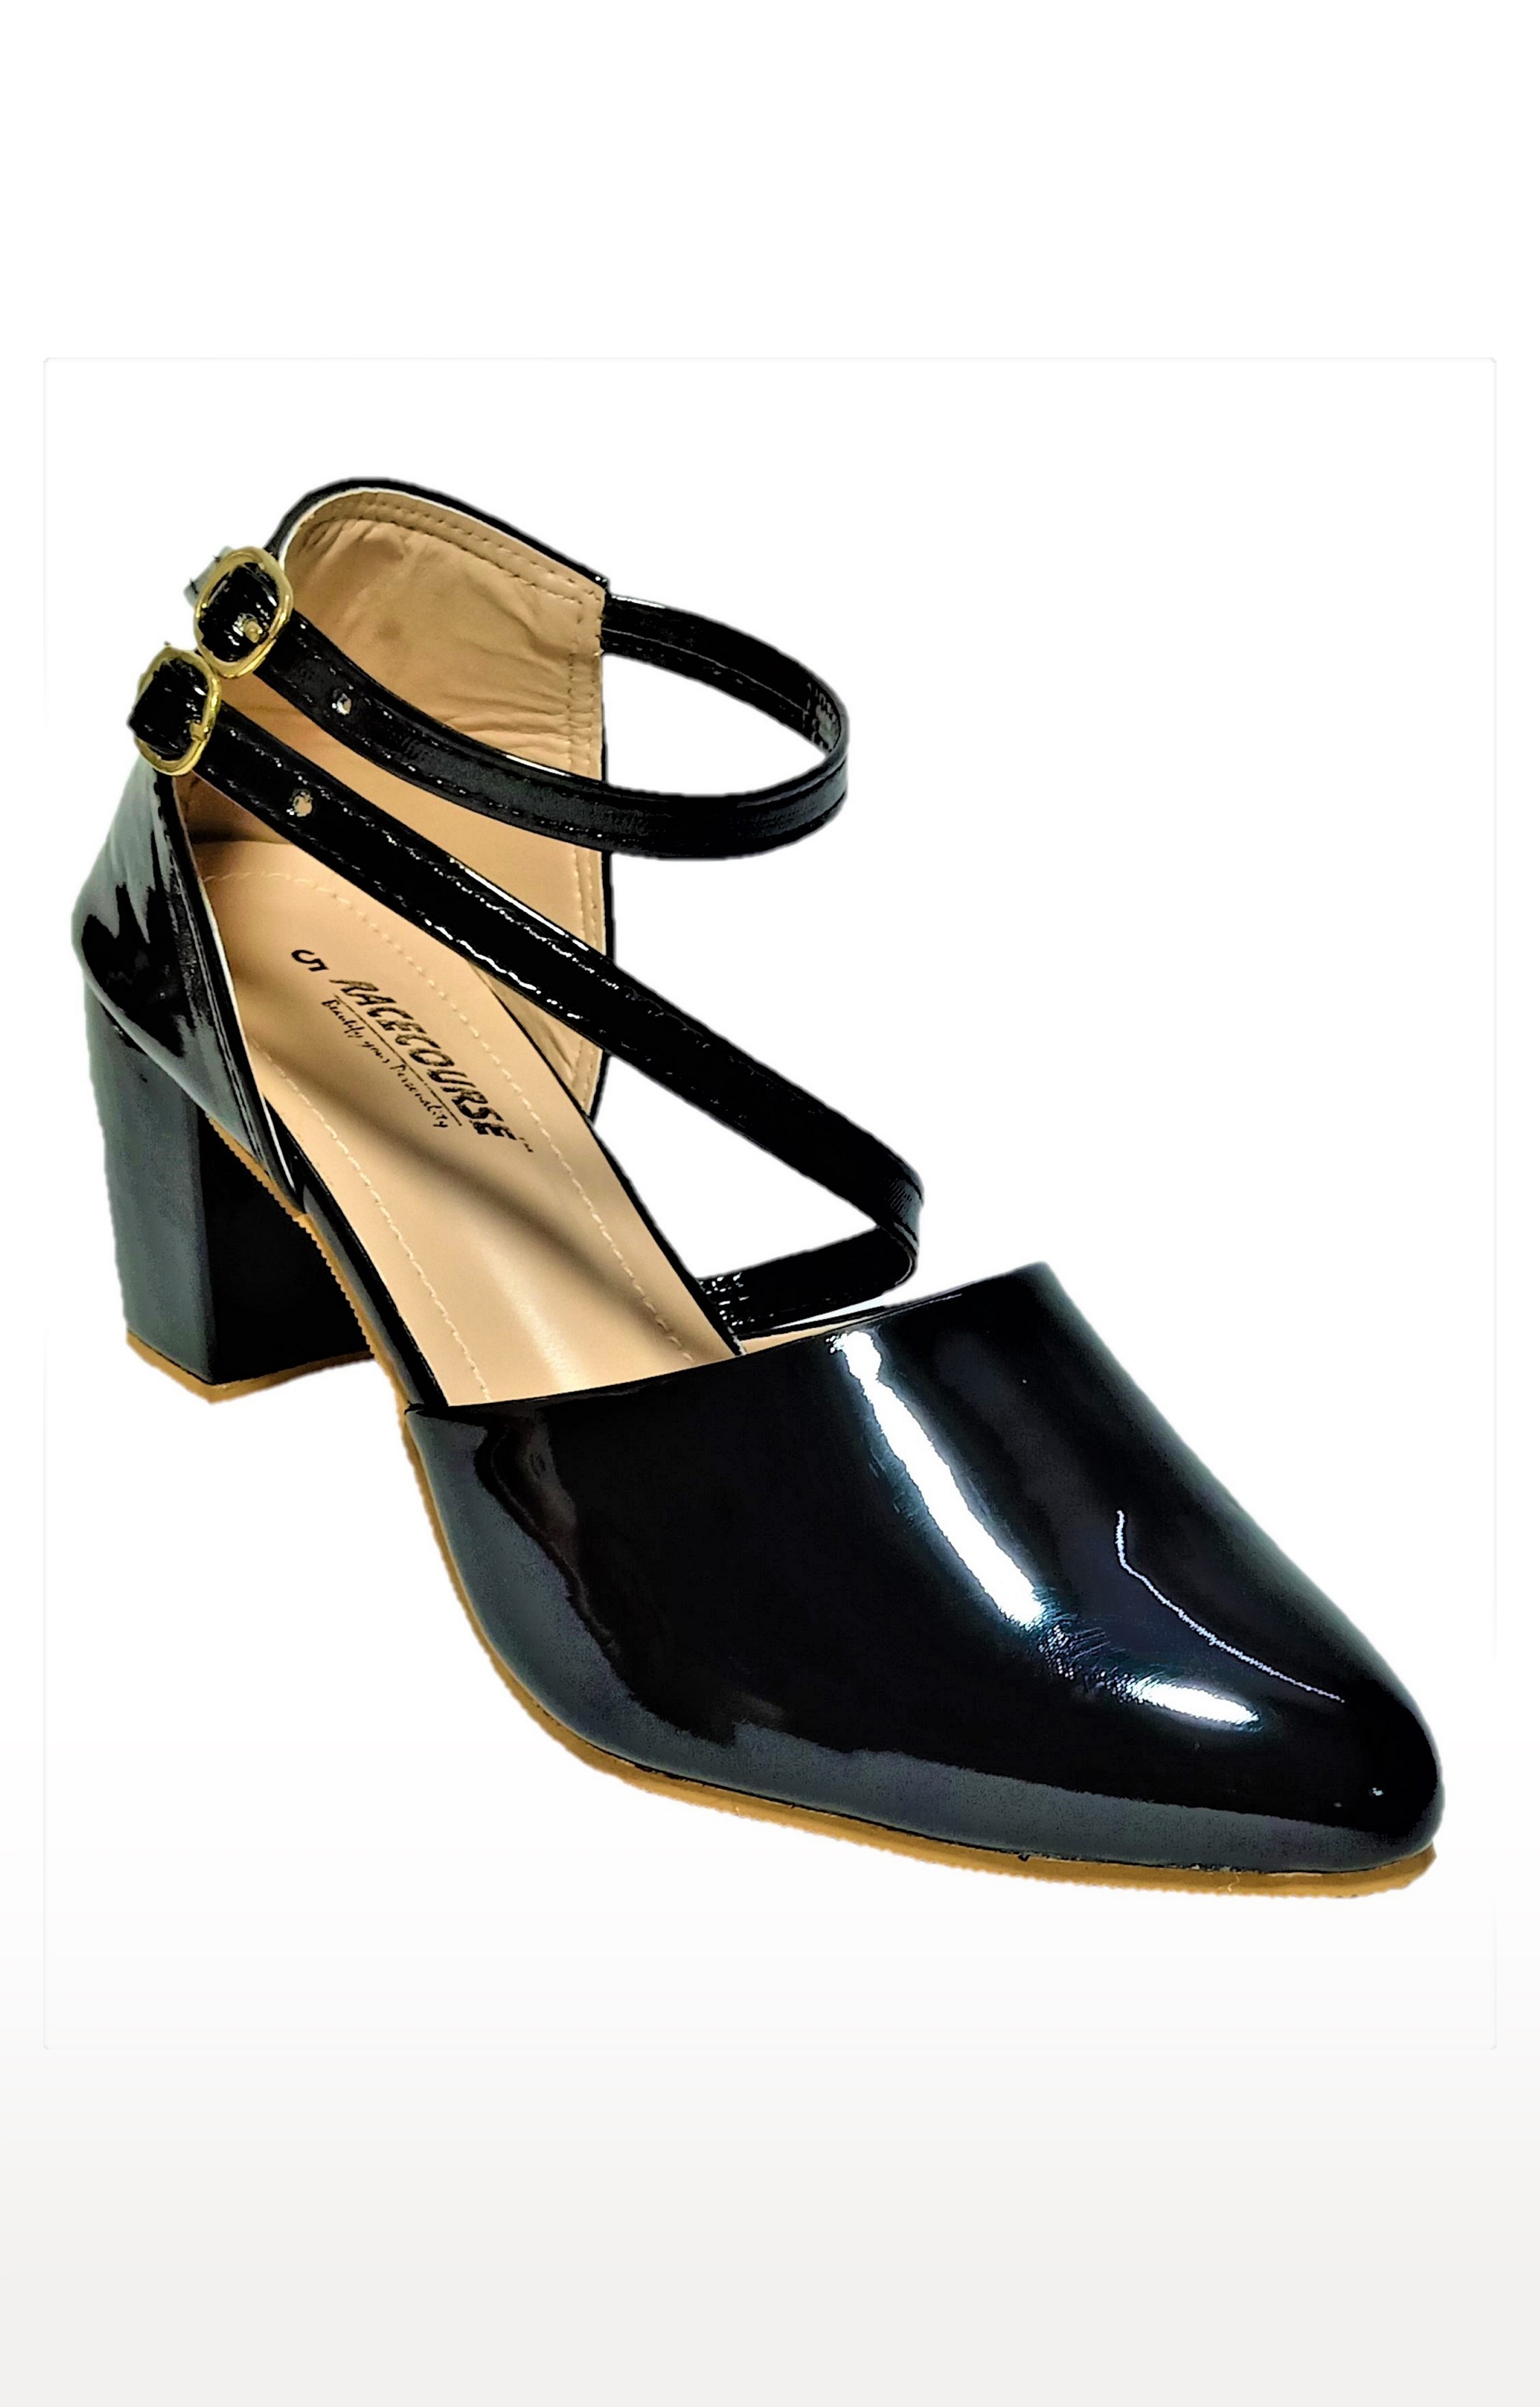 Buy Sandals For Women With 1 1/2 Inch Heels online | Lazada.com.ph